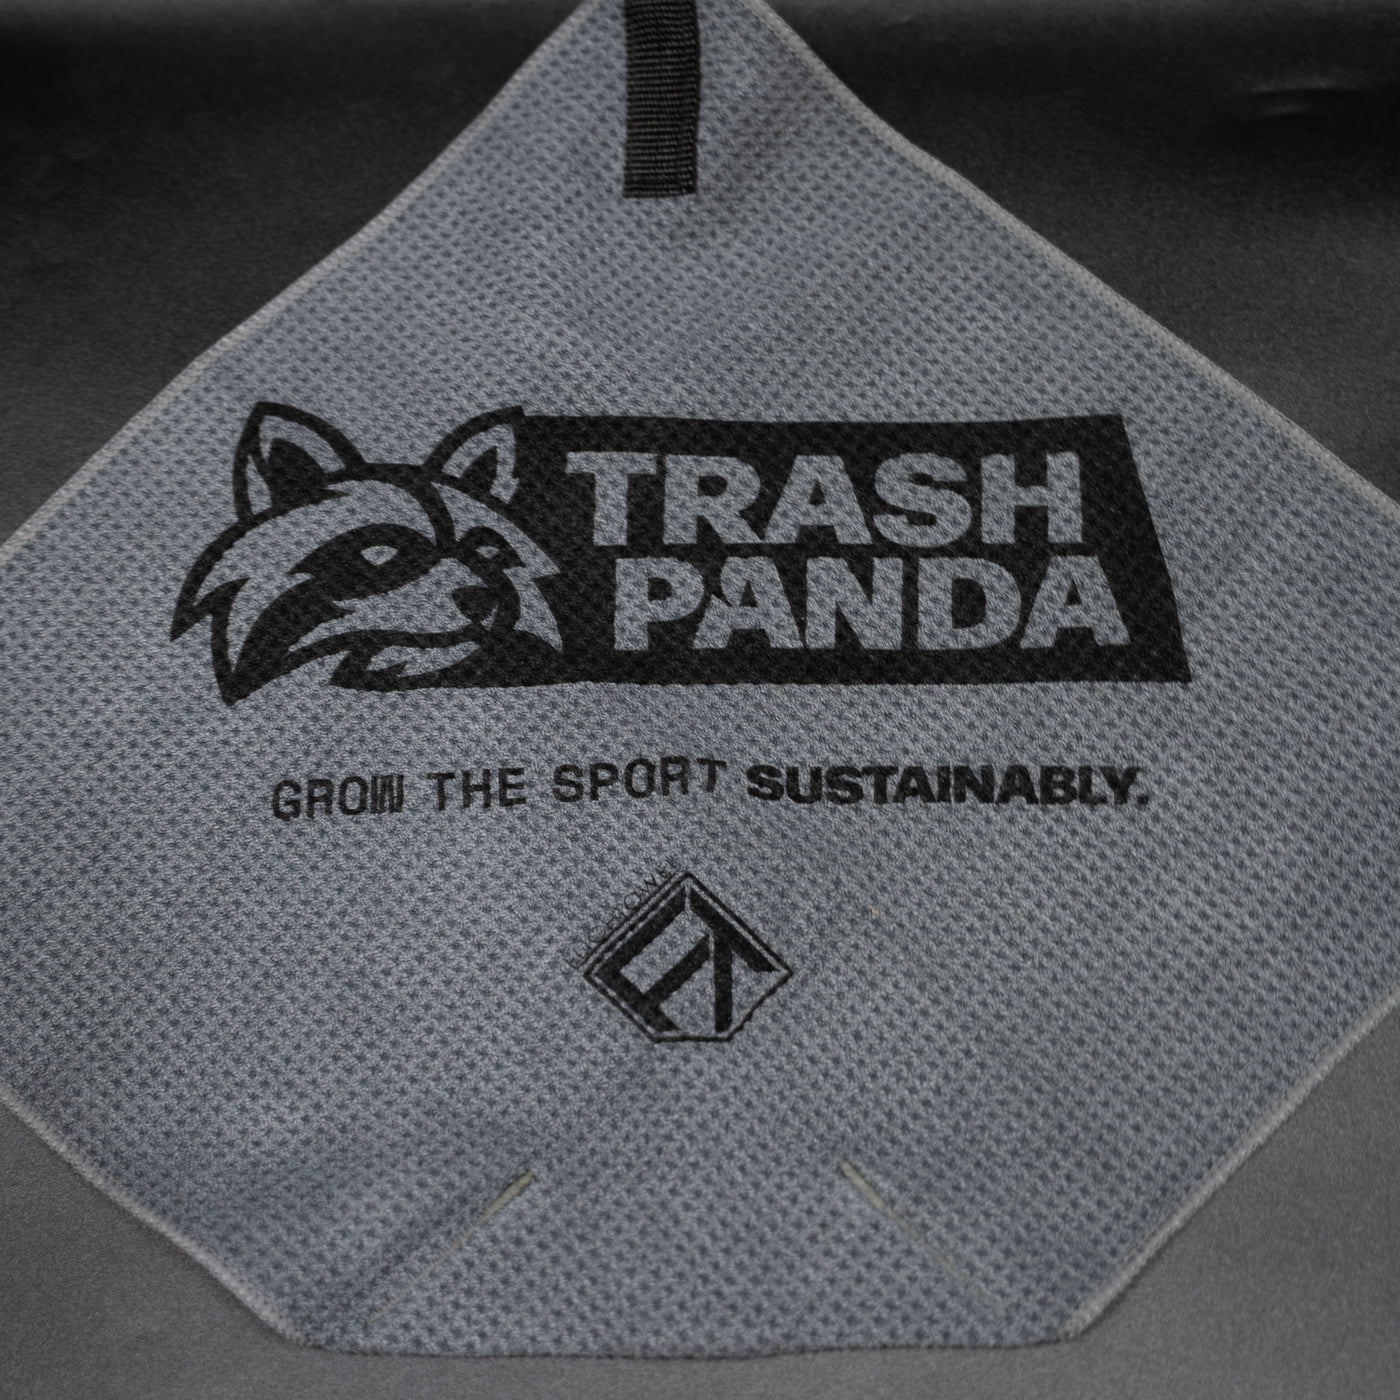 Trash Panda FlighTowel